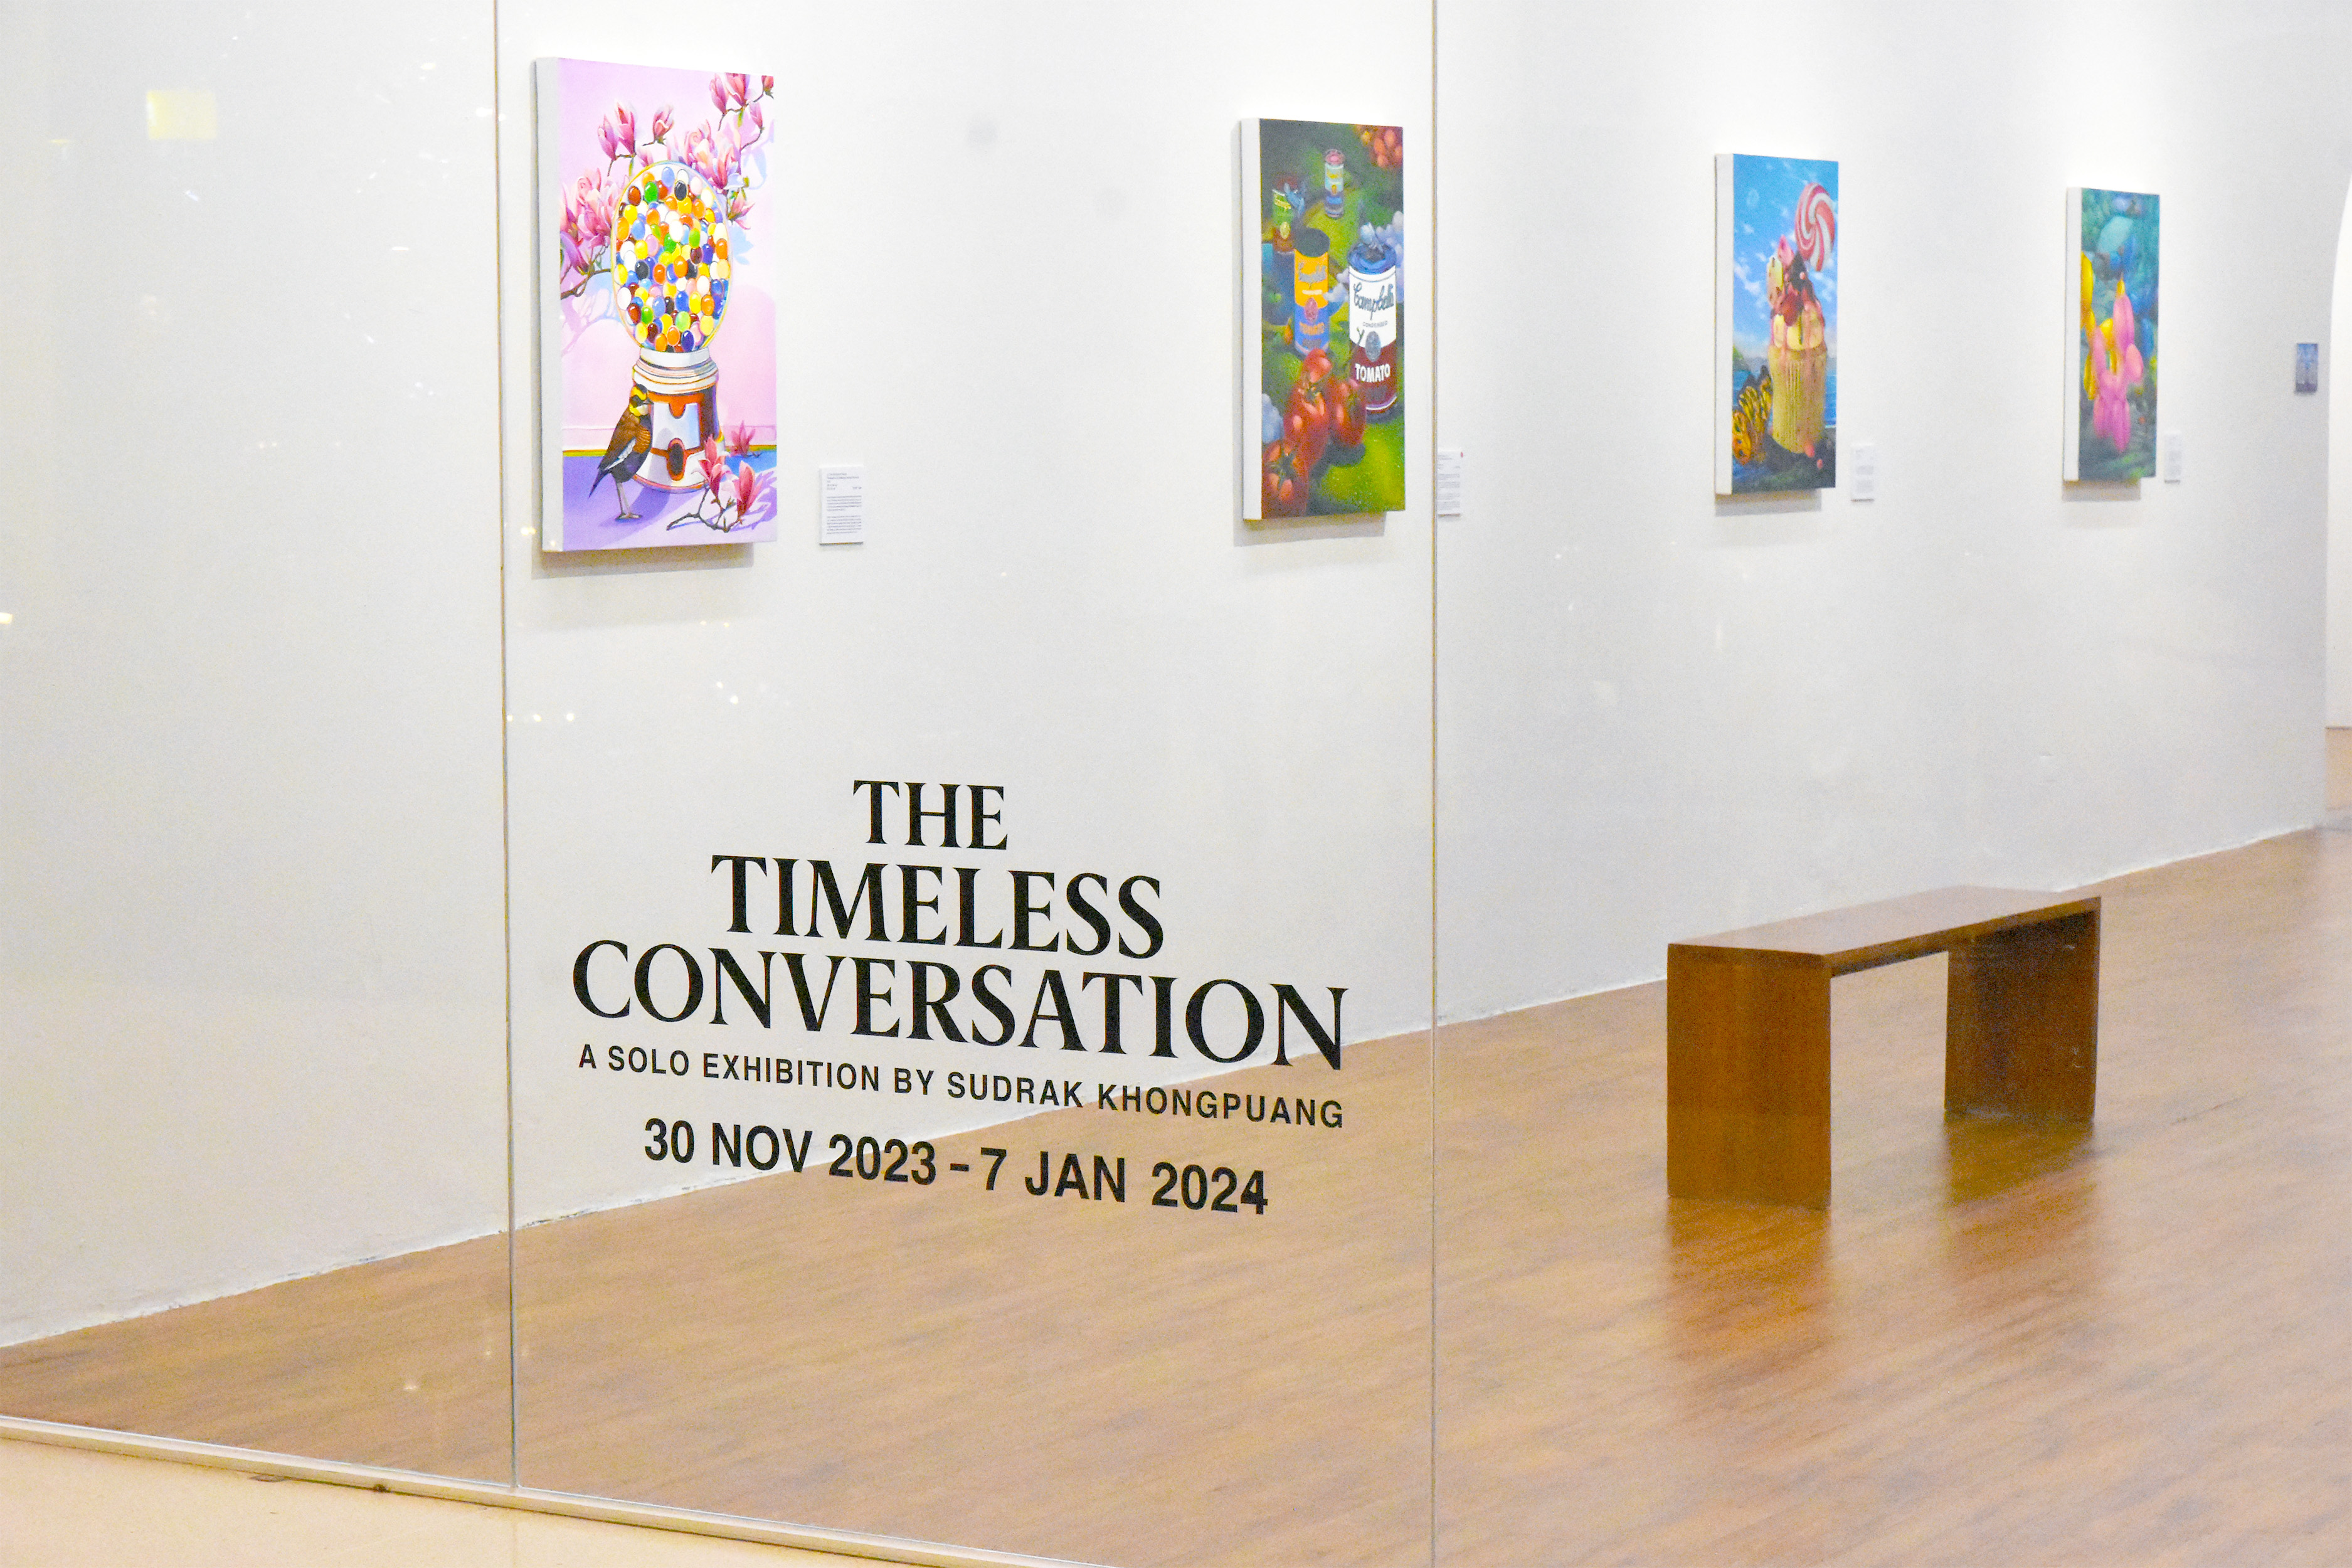 Solo Art Exhibition “Timeless Conversation” in Bangkok, Thailand